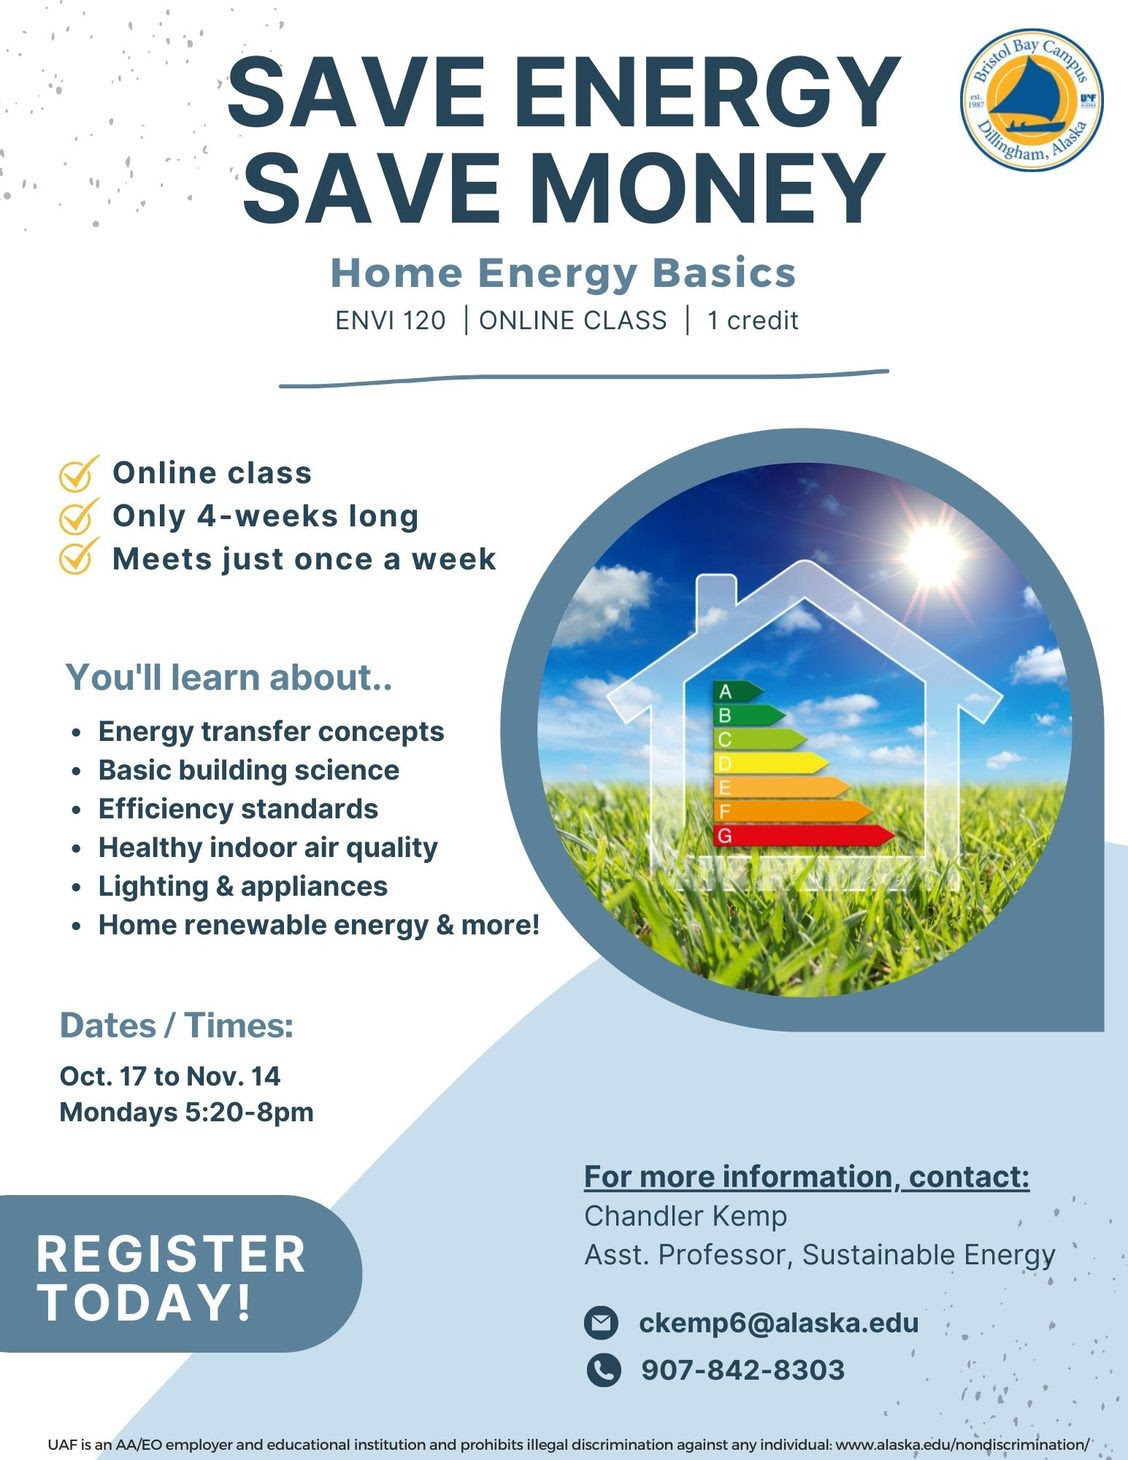 Save Money on Home Heating — Register for Home Energy Basics Classes